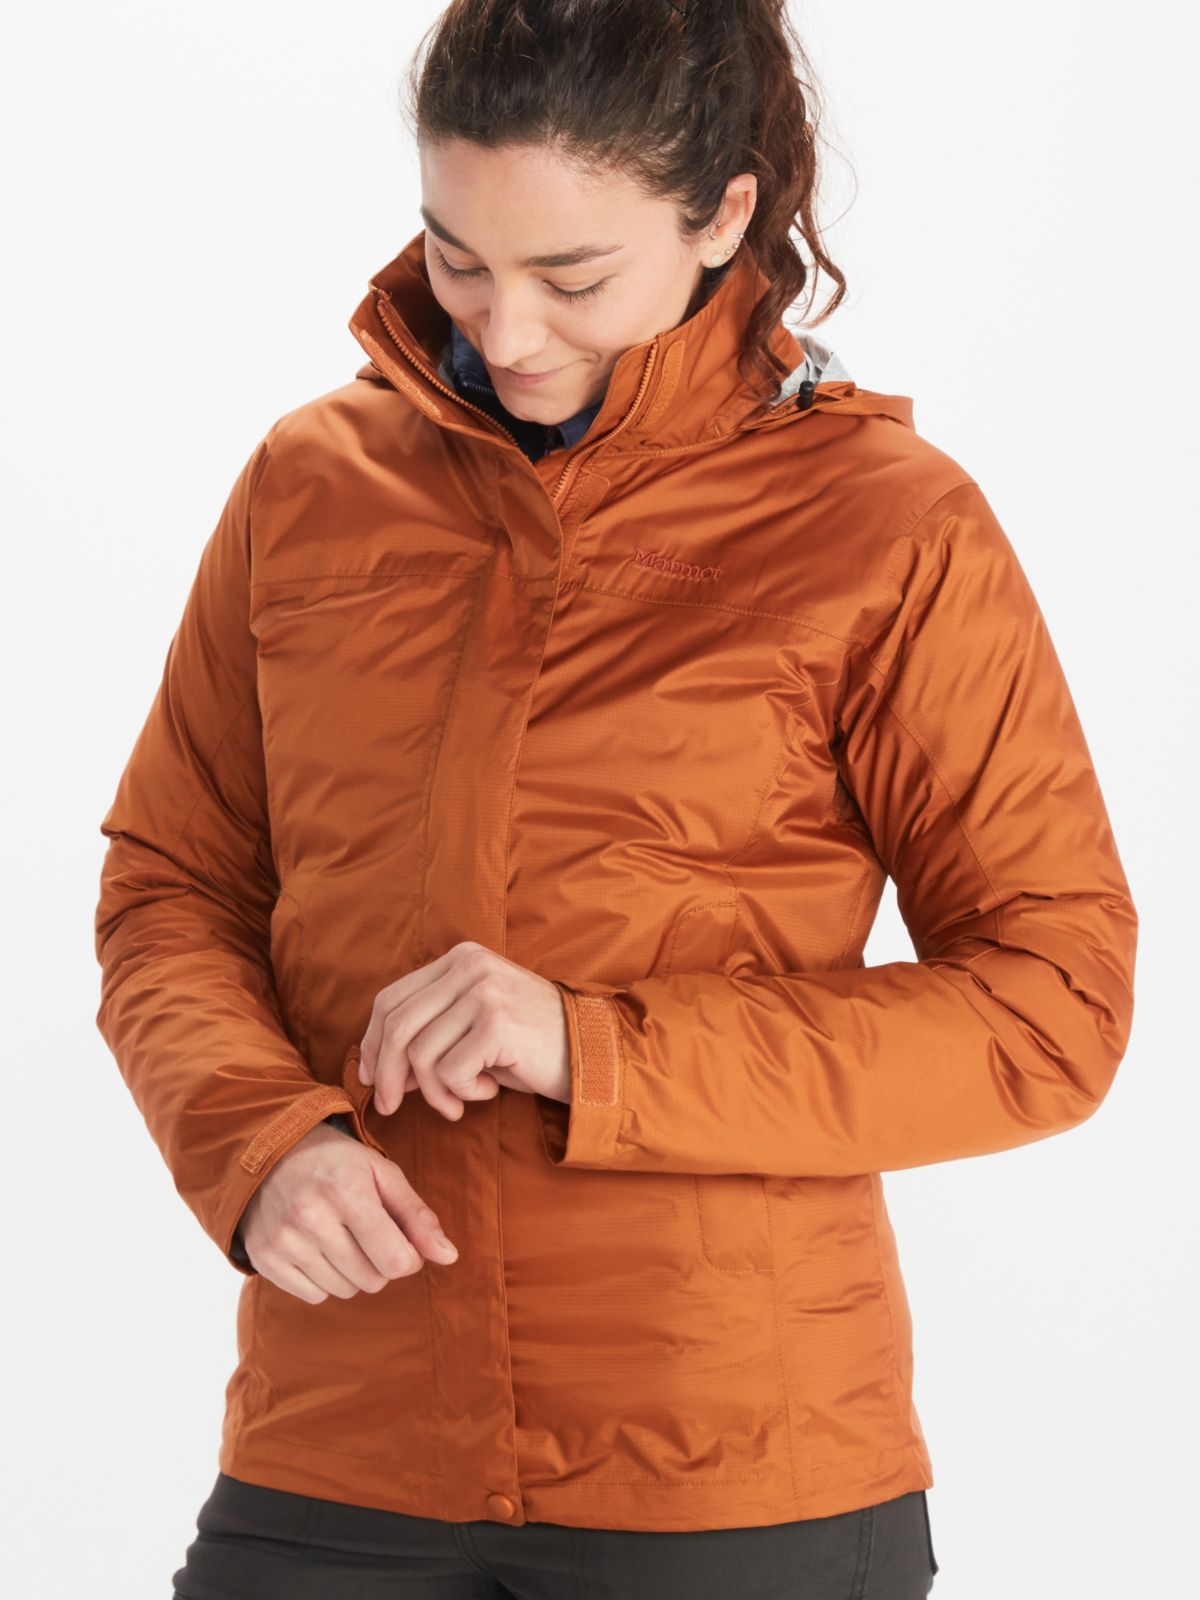 Woman adjusts velcro on the sleeve of her orange Marmot PreCip jacket